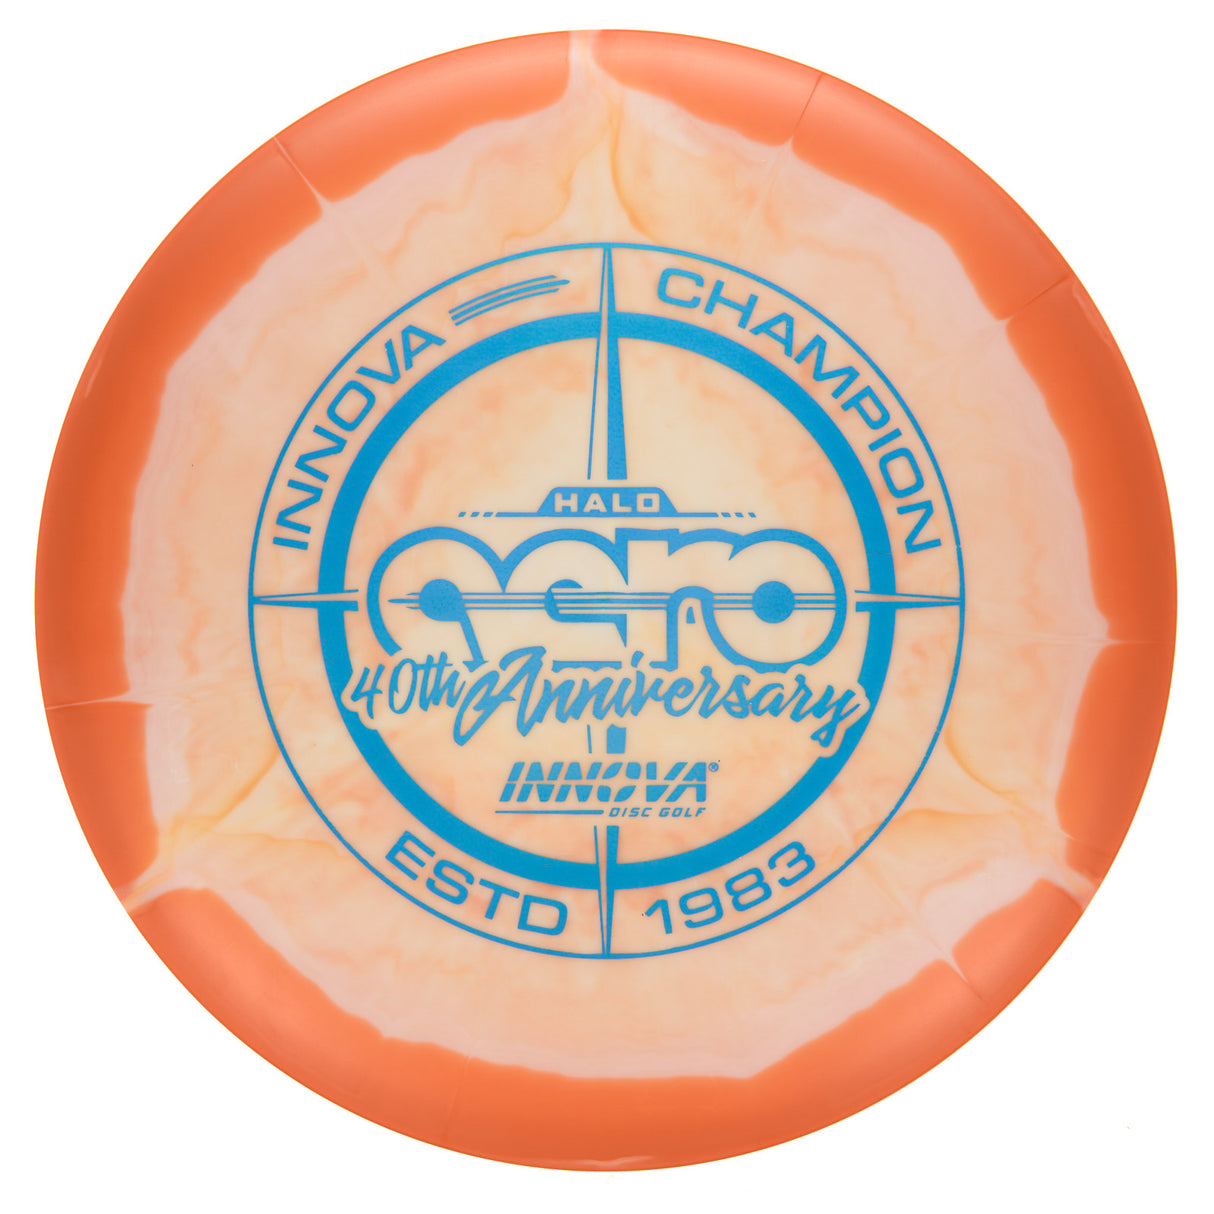 Innova Aero - 40th Anniversary Stamp Halo Star 182g | Style 0011